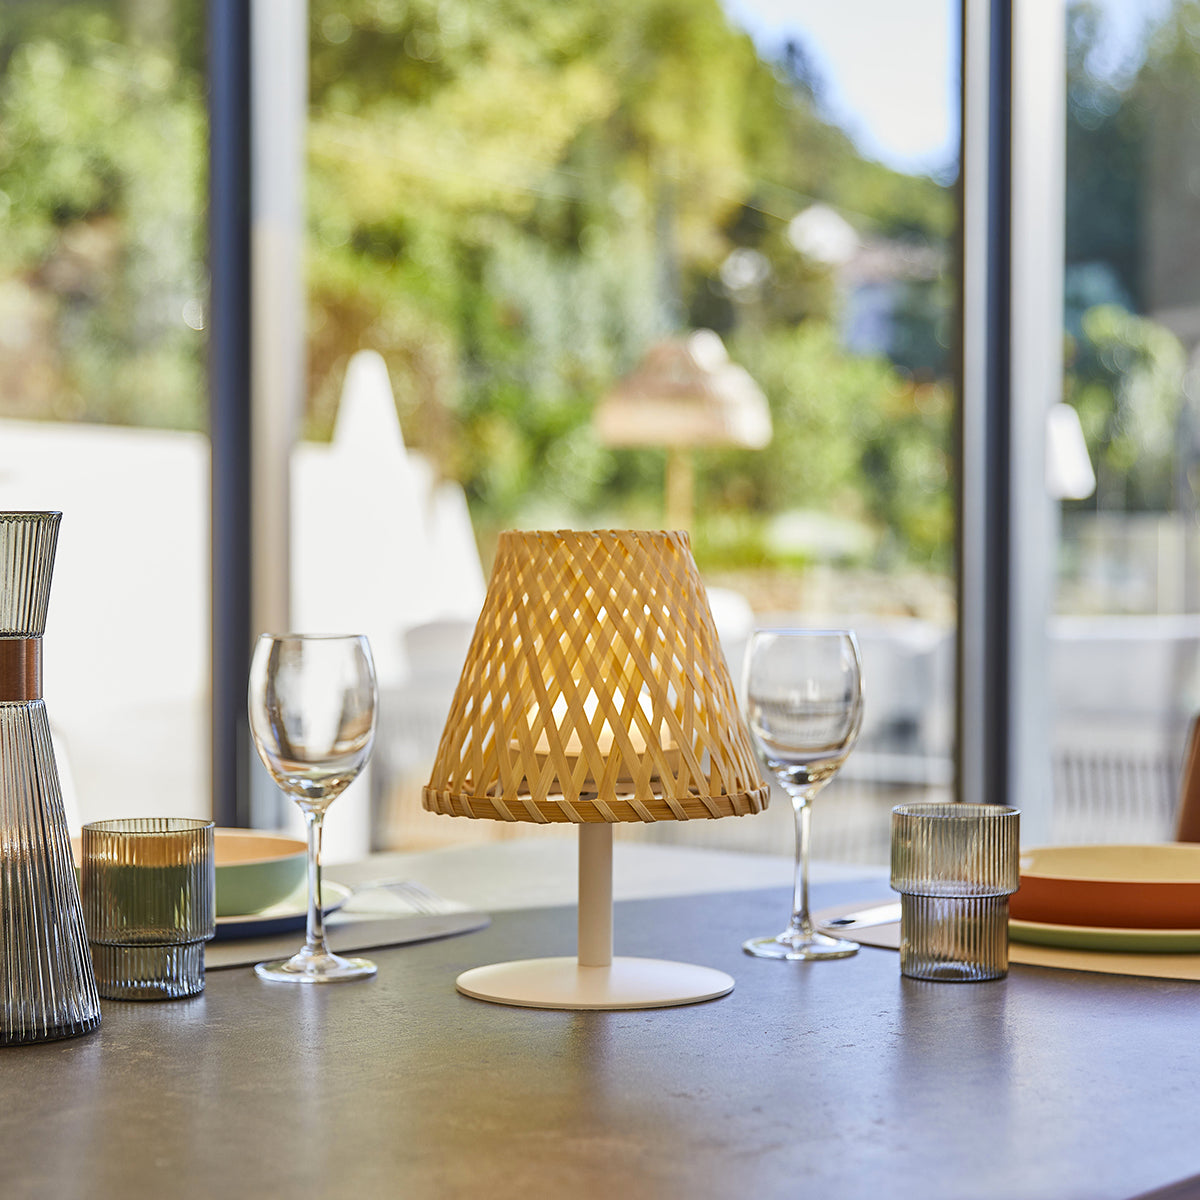 Lampe de table sans fil en raphia naturel LED blanc chaud/blanc dimmab –  REDDECO.COM